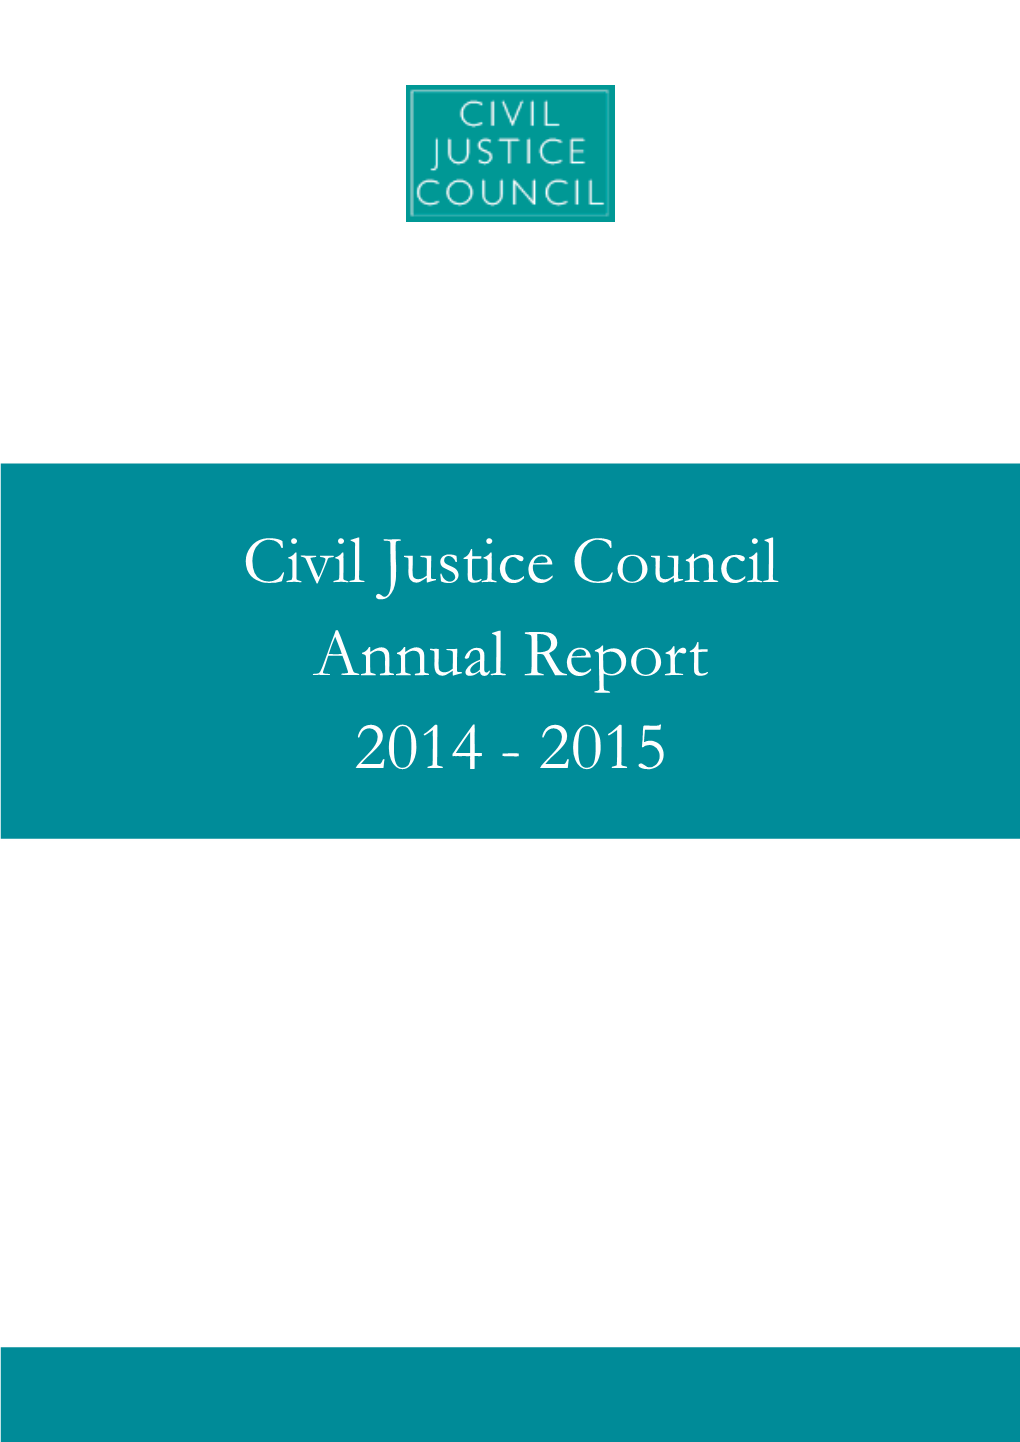 Civil Justice Council Annual Report 2014 - 2015 Contents Civil Justice Council Annual Report 2014 - 2015